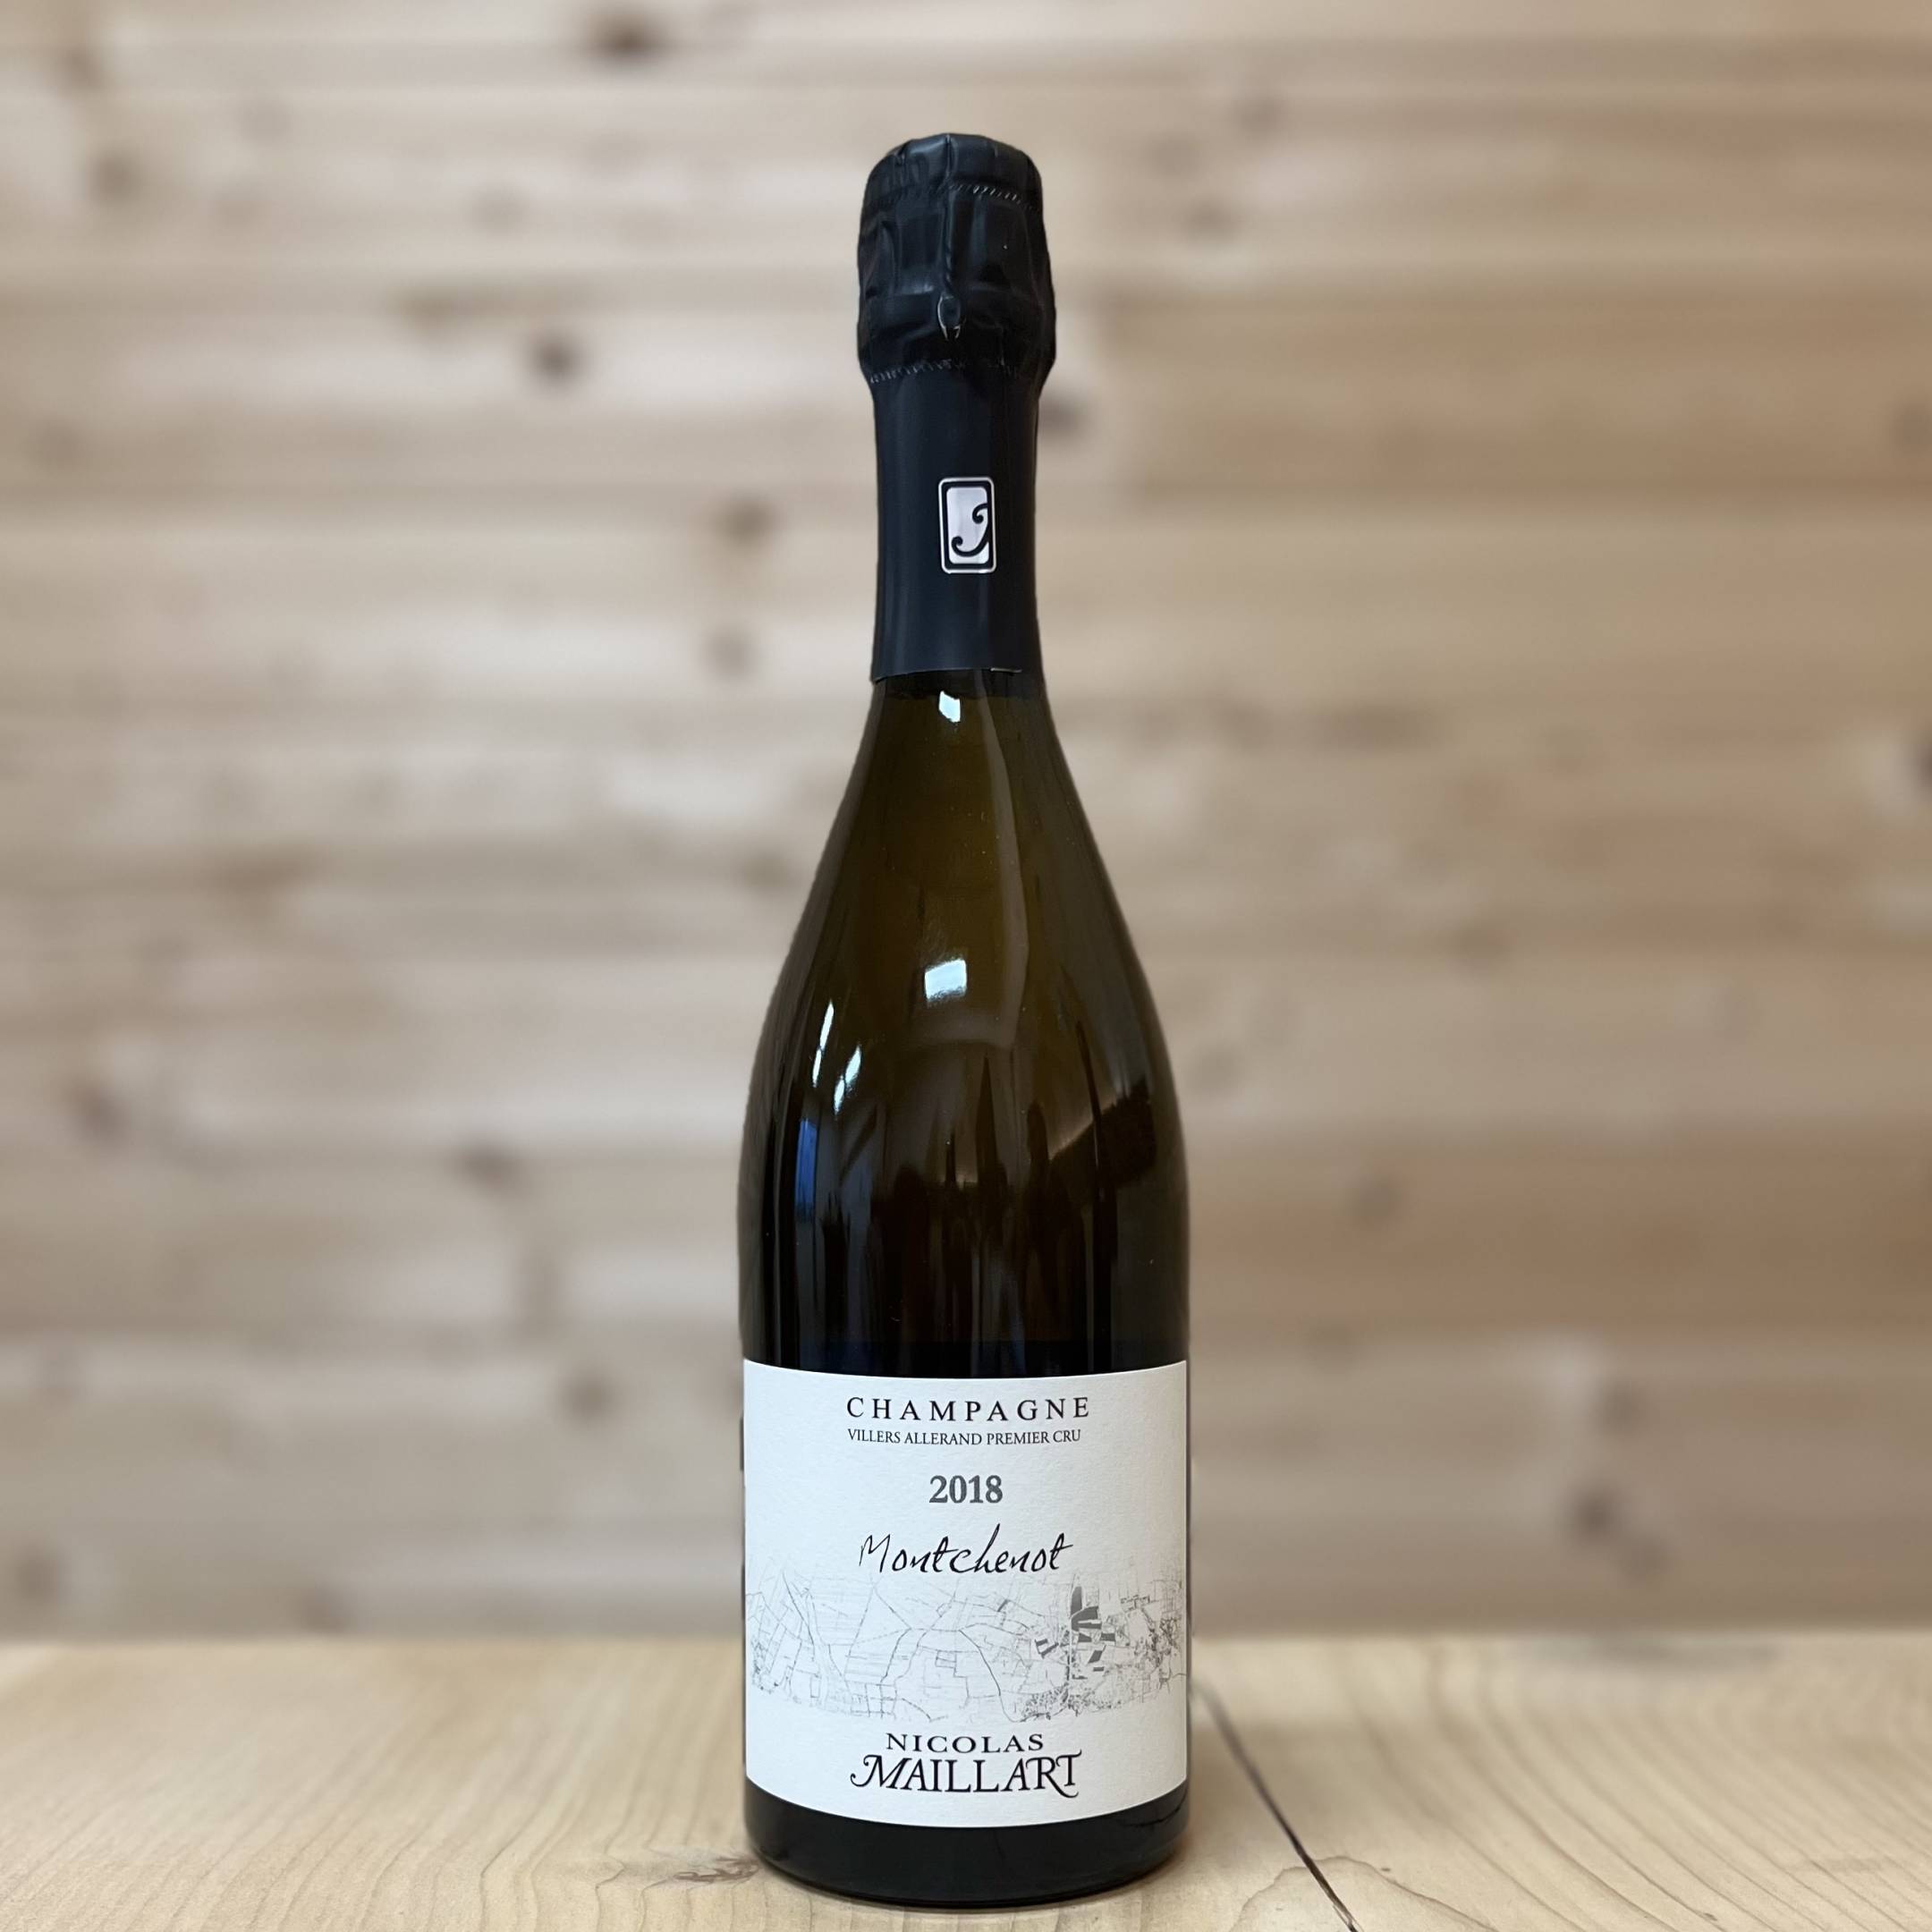 Nicolas Maillart Champagne Extra Brut Montchenot 2018